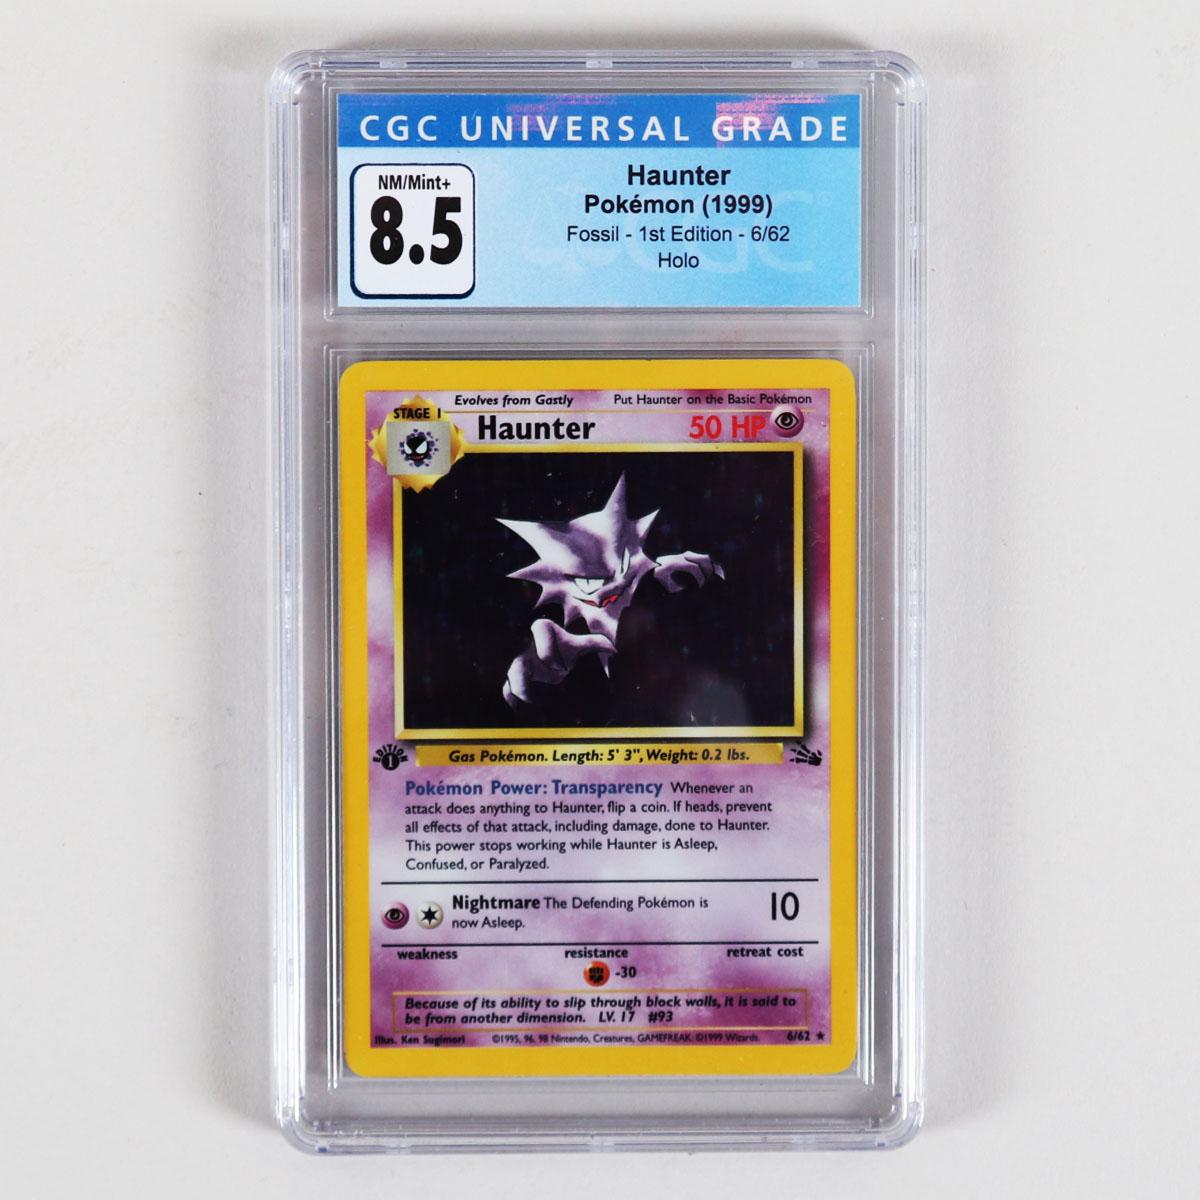 1999 Pokemon Haunter Graded Card Fossil